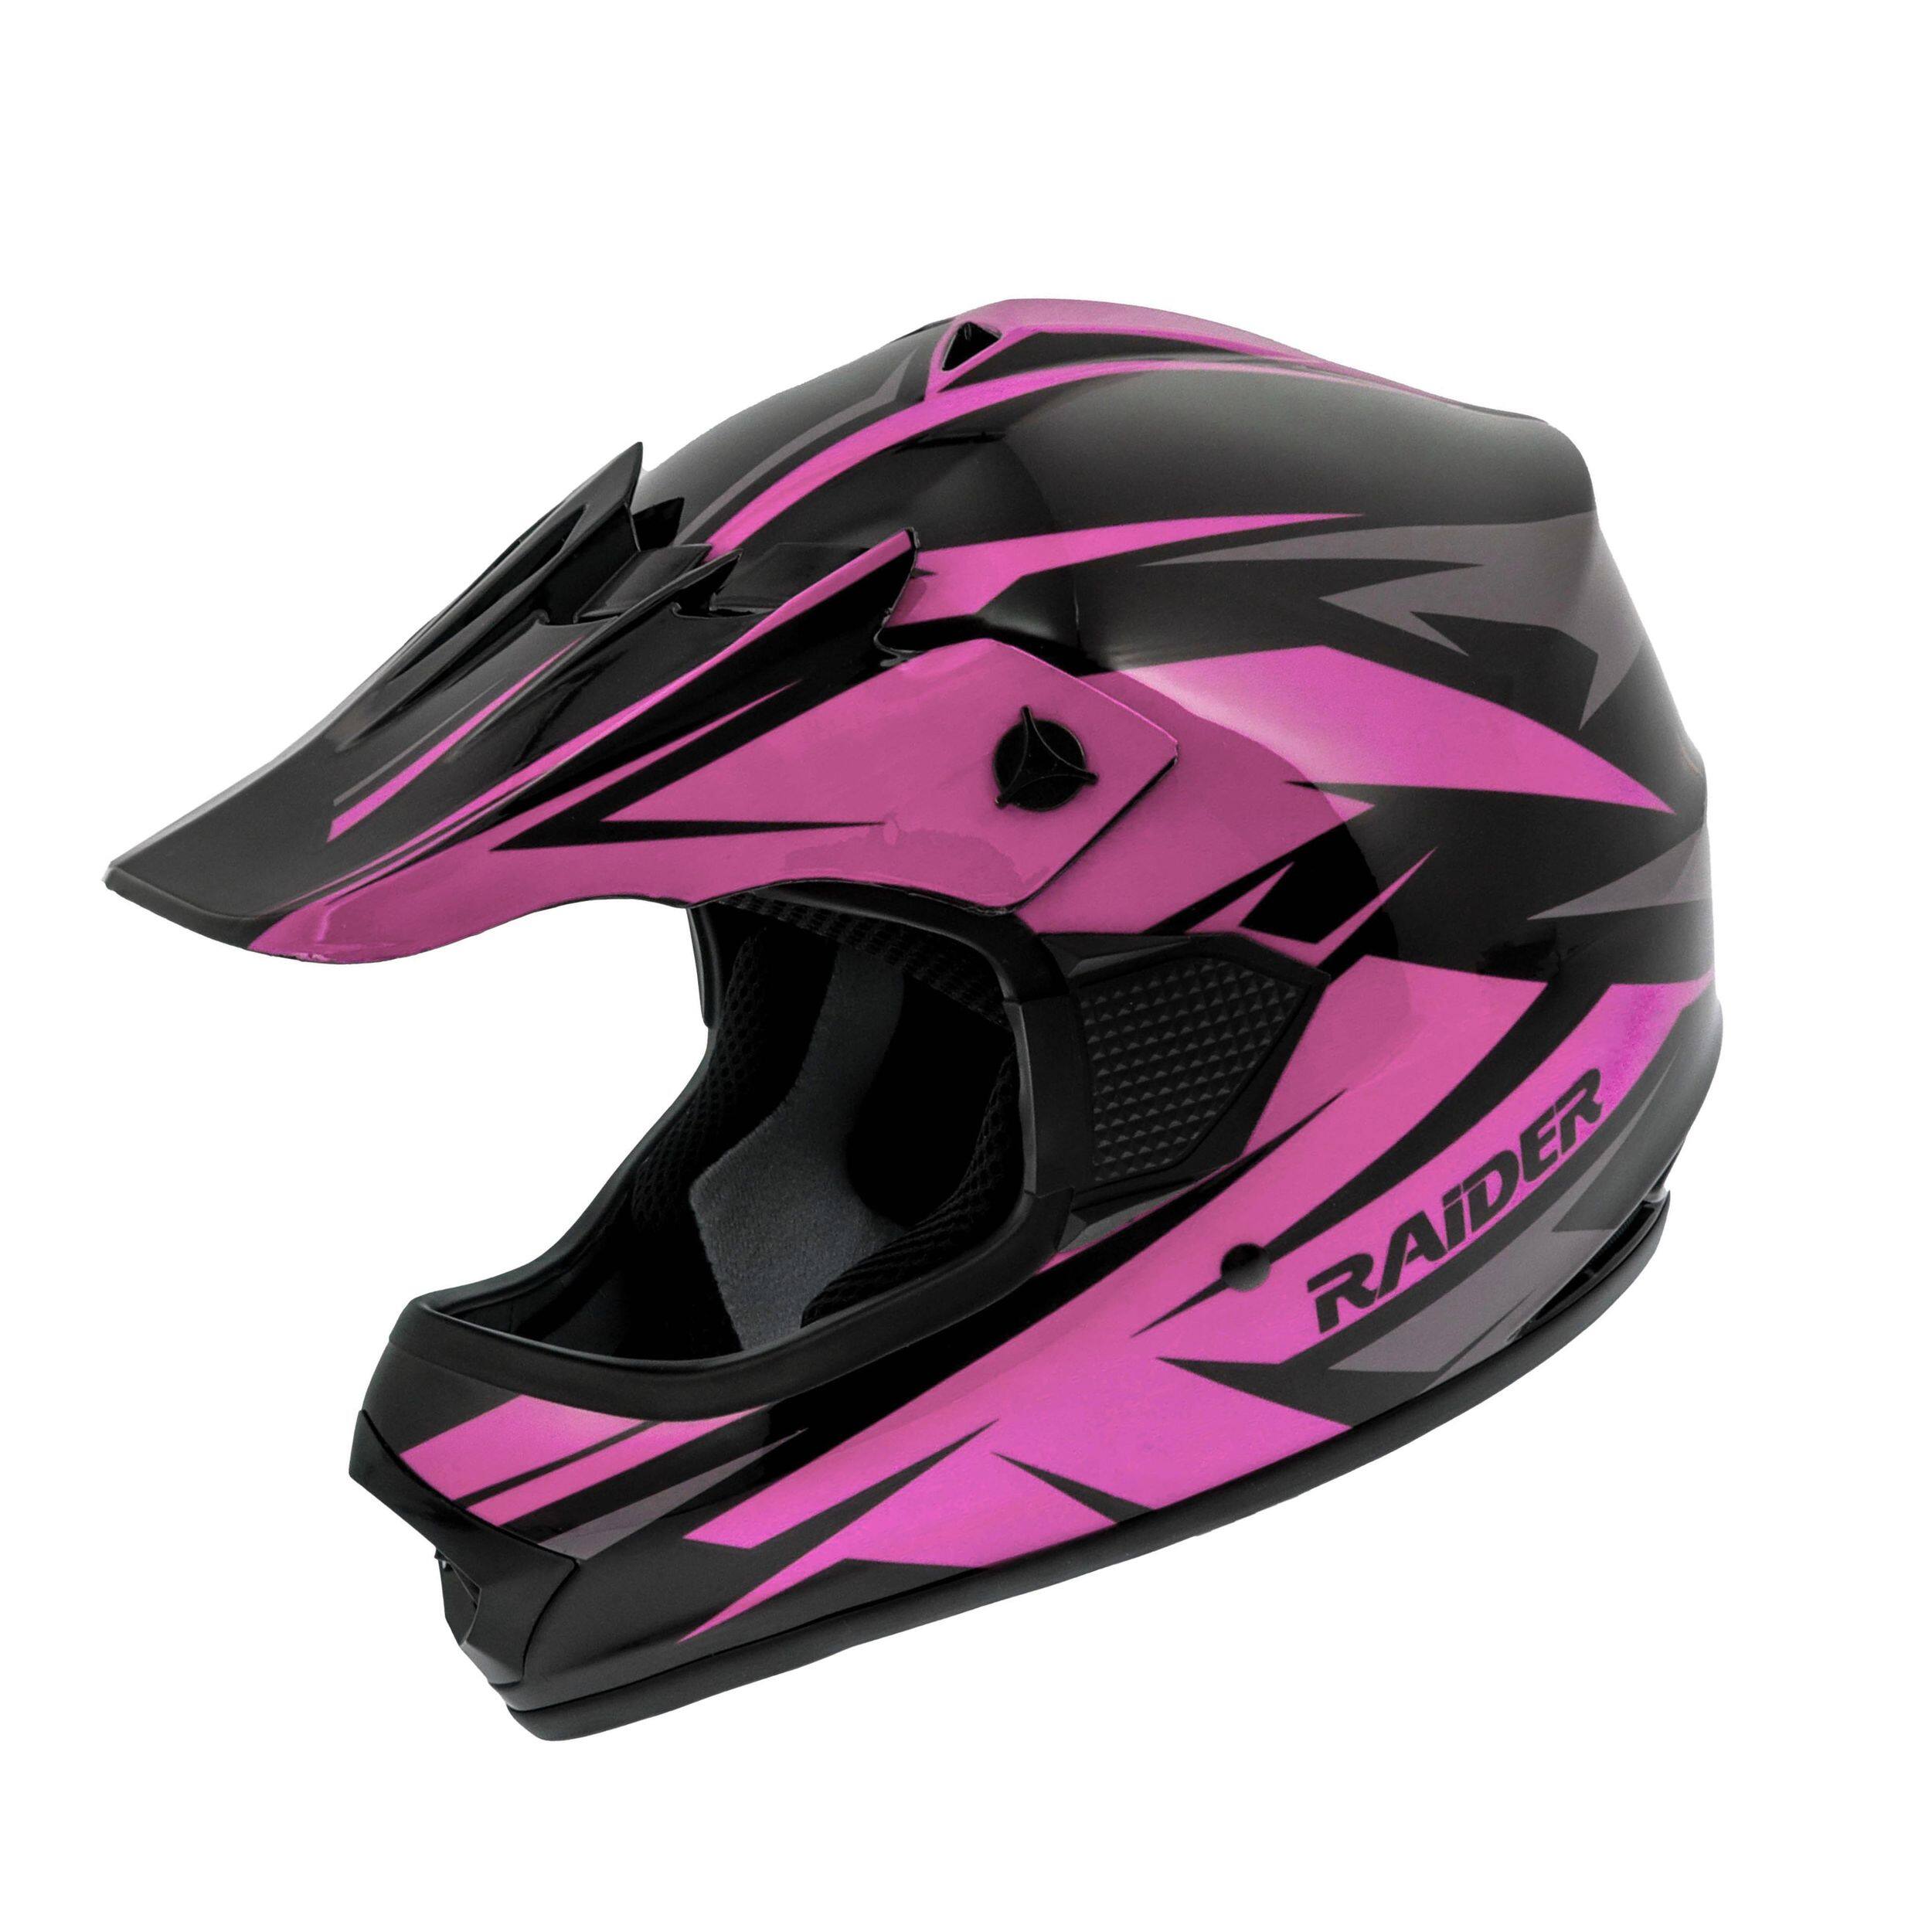 Raider GX4 Youth Bike/ATV Helmet, Pink | Canadian Tire